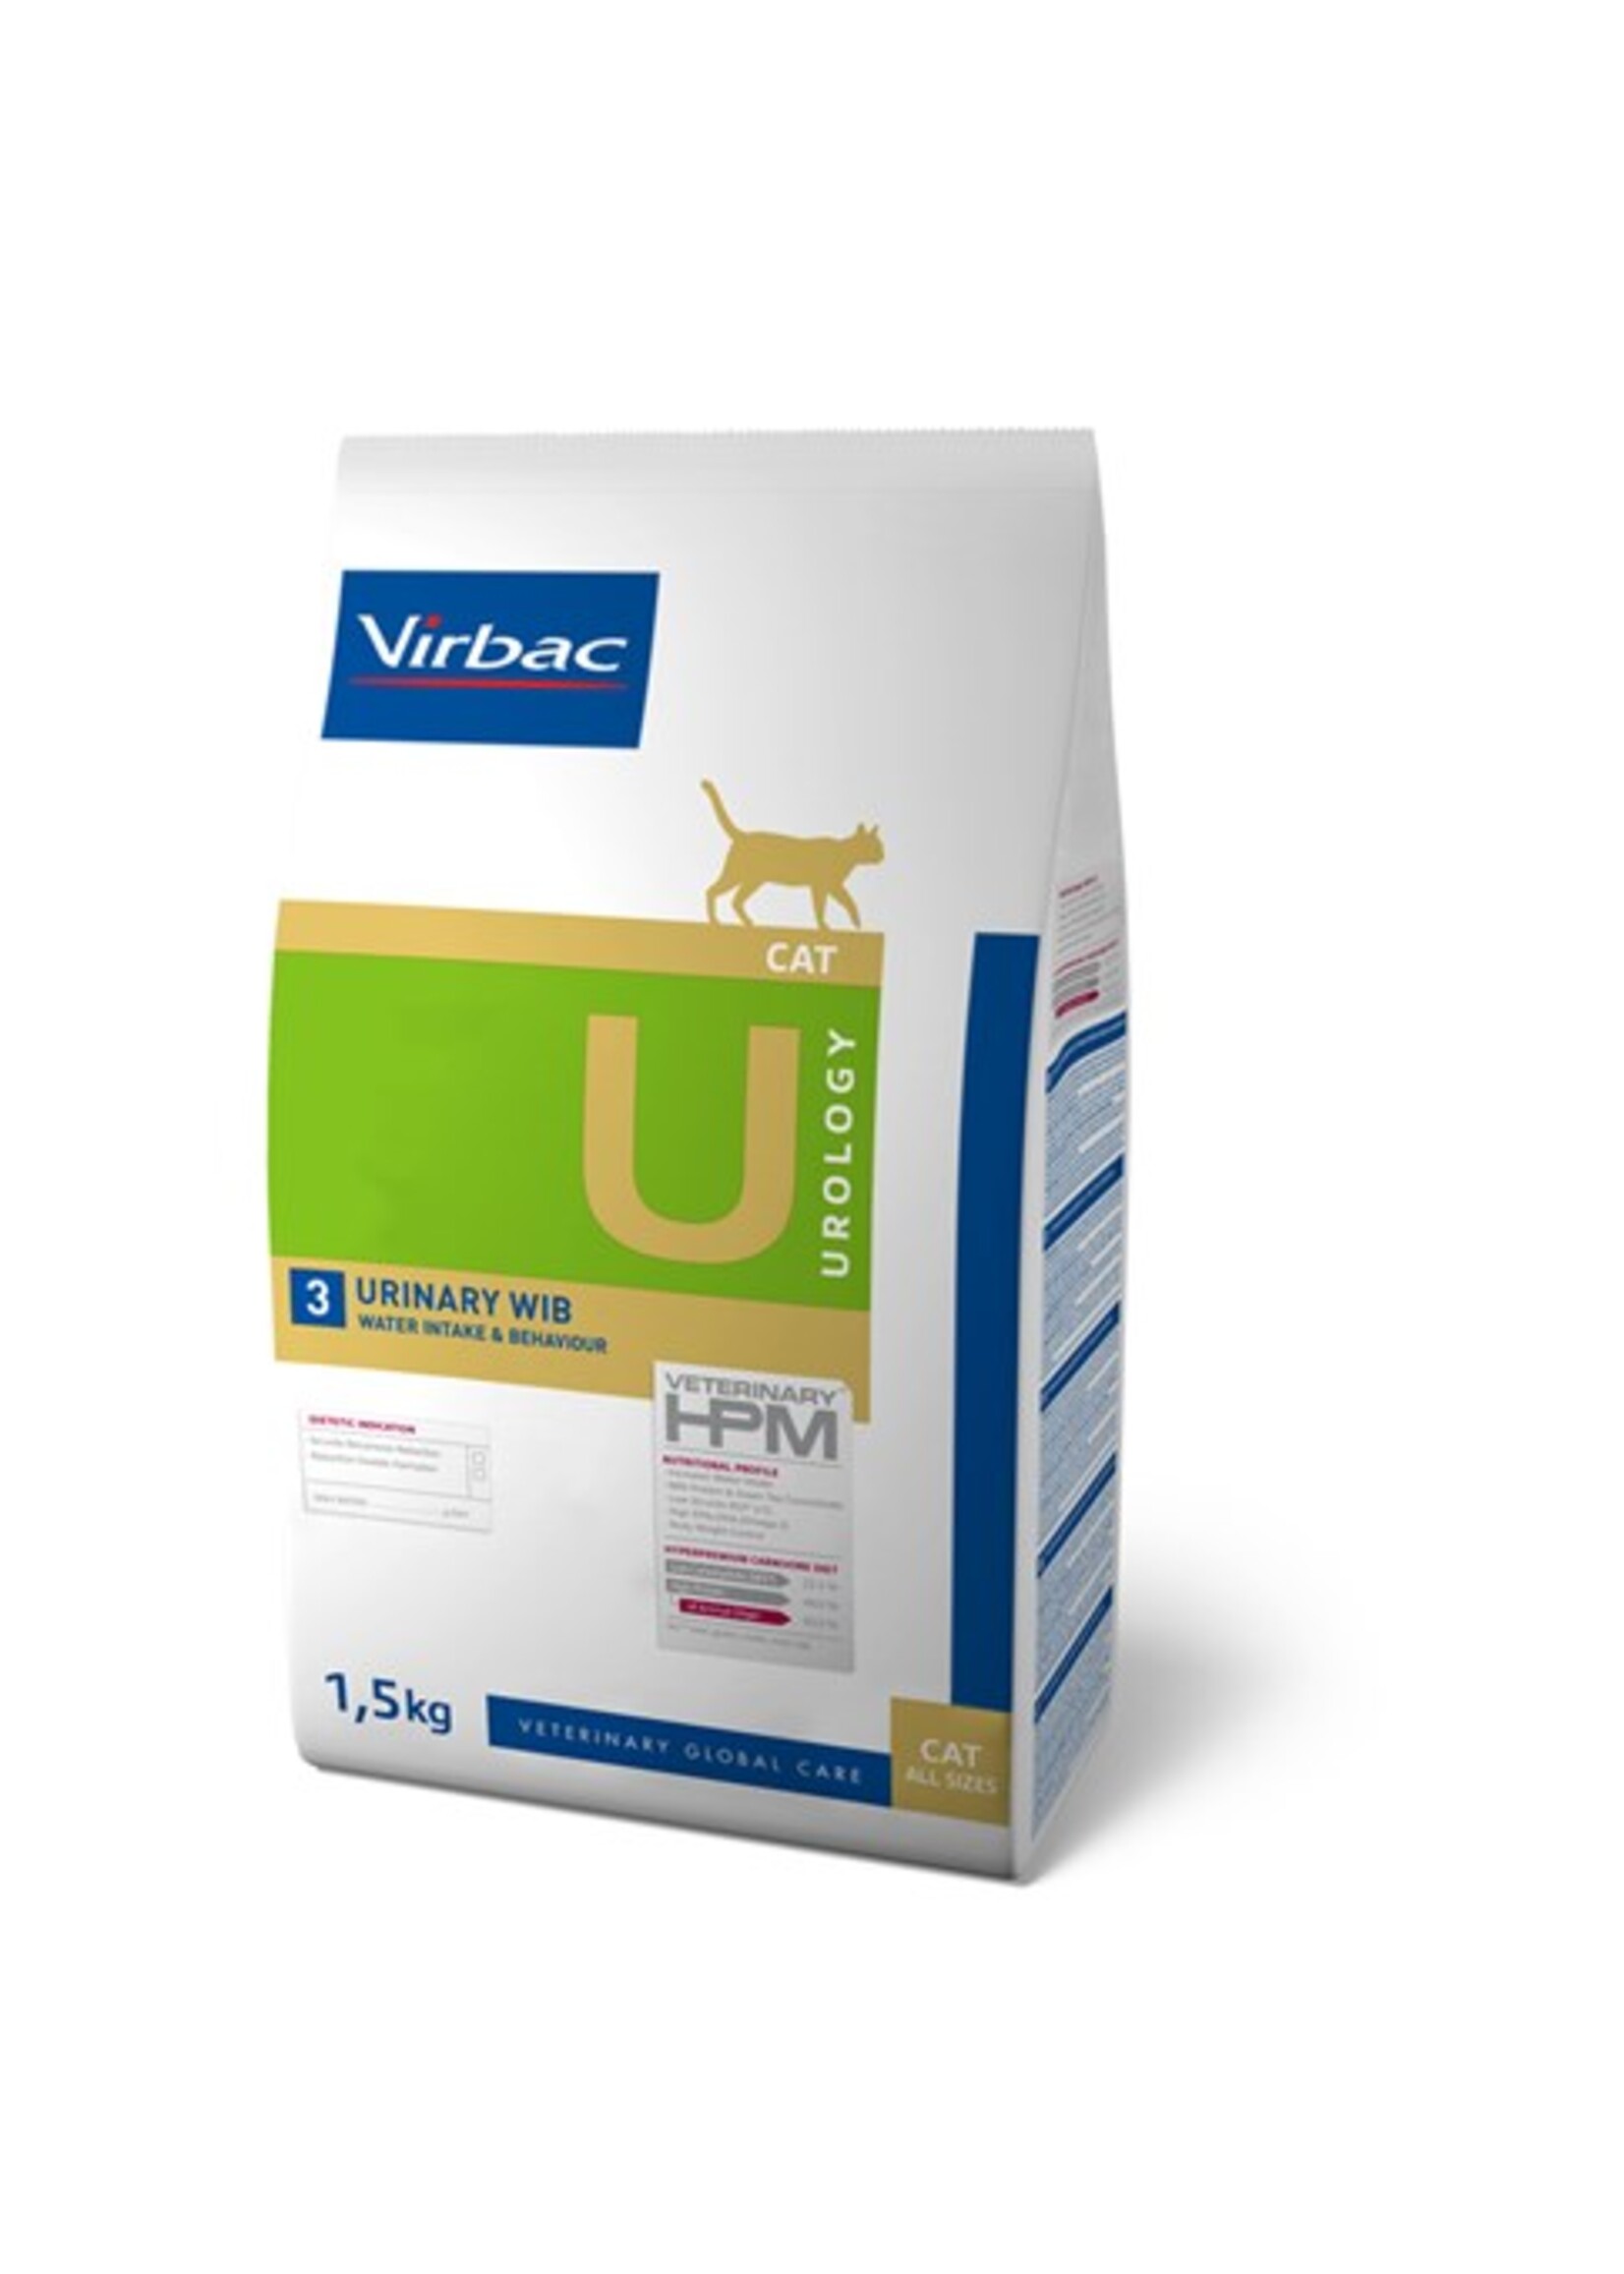 Virbac Virbac Hpm Chat Urology Urinary Wib U3 1,5kg